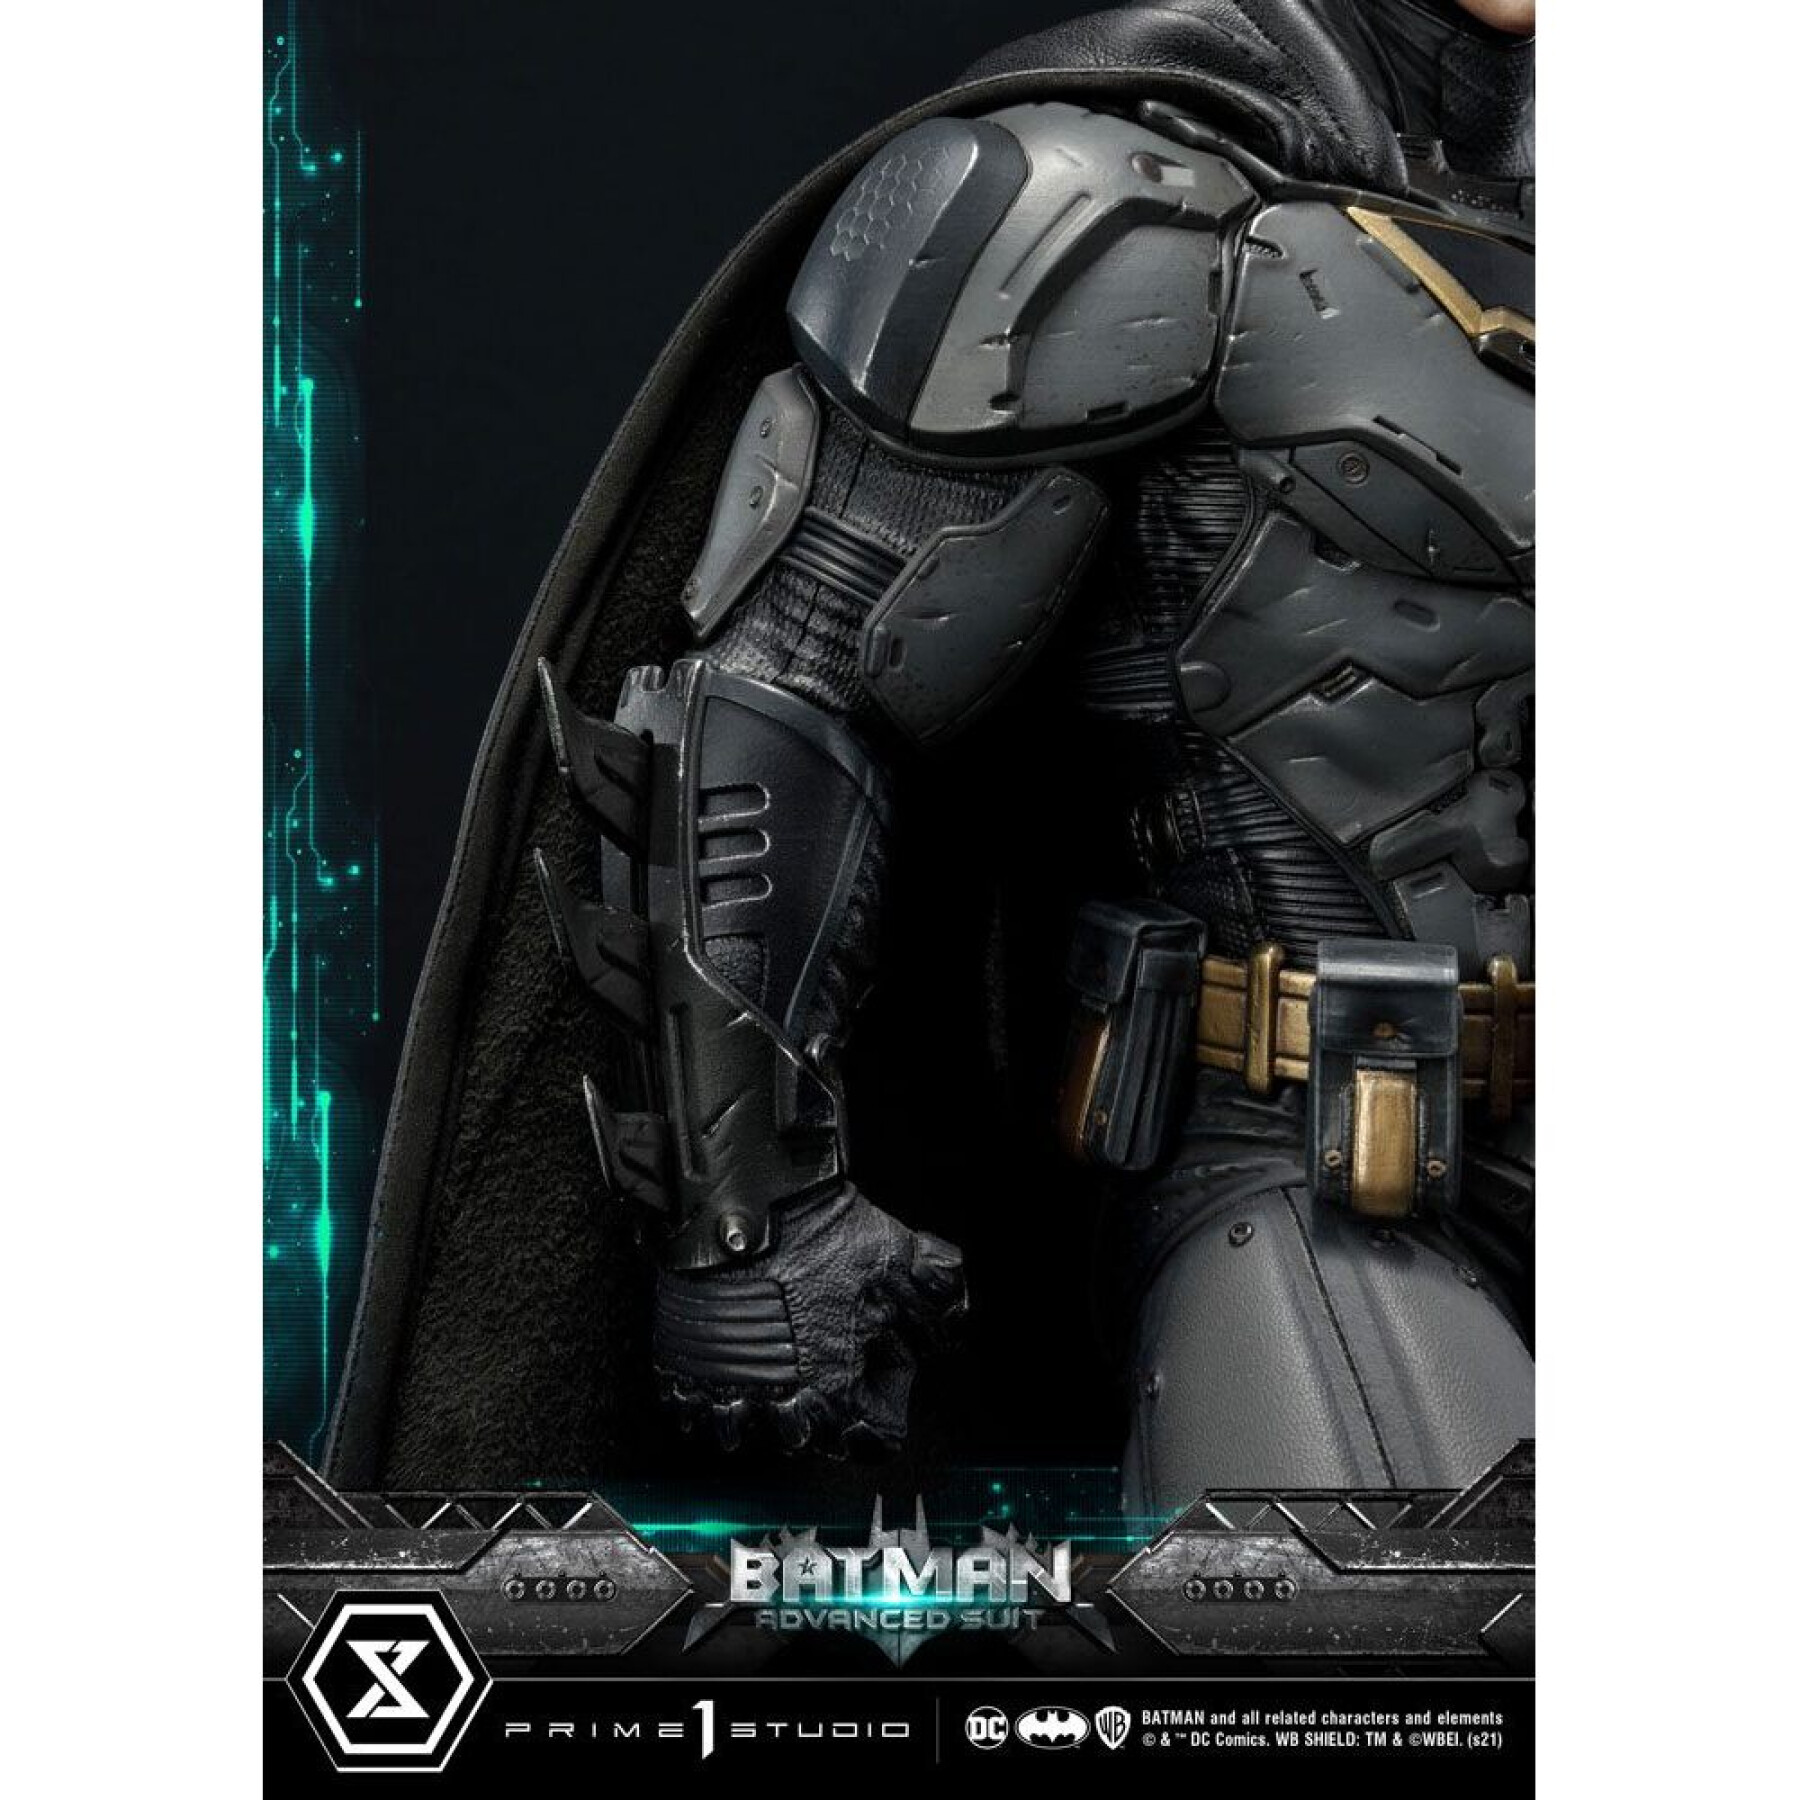 Figurine Prime 1 Studio Batman Advanced Suit by Josh Nizzi